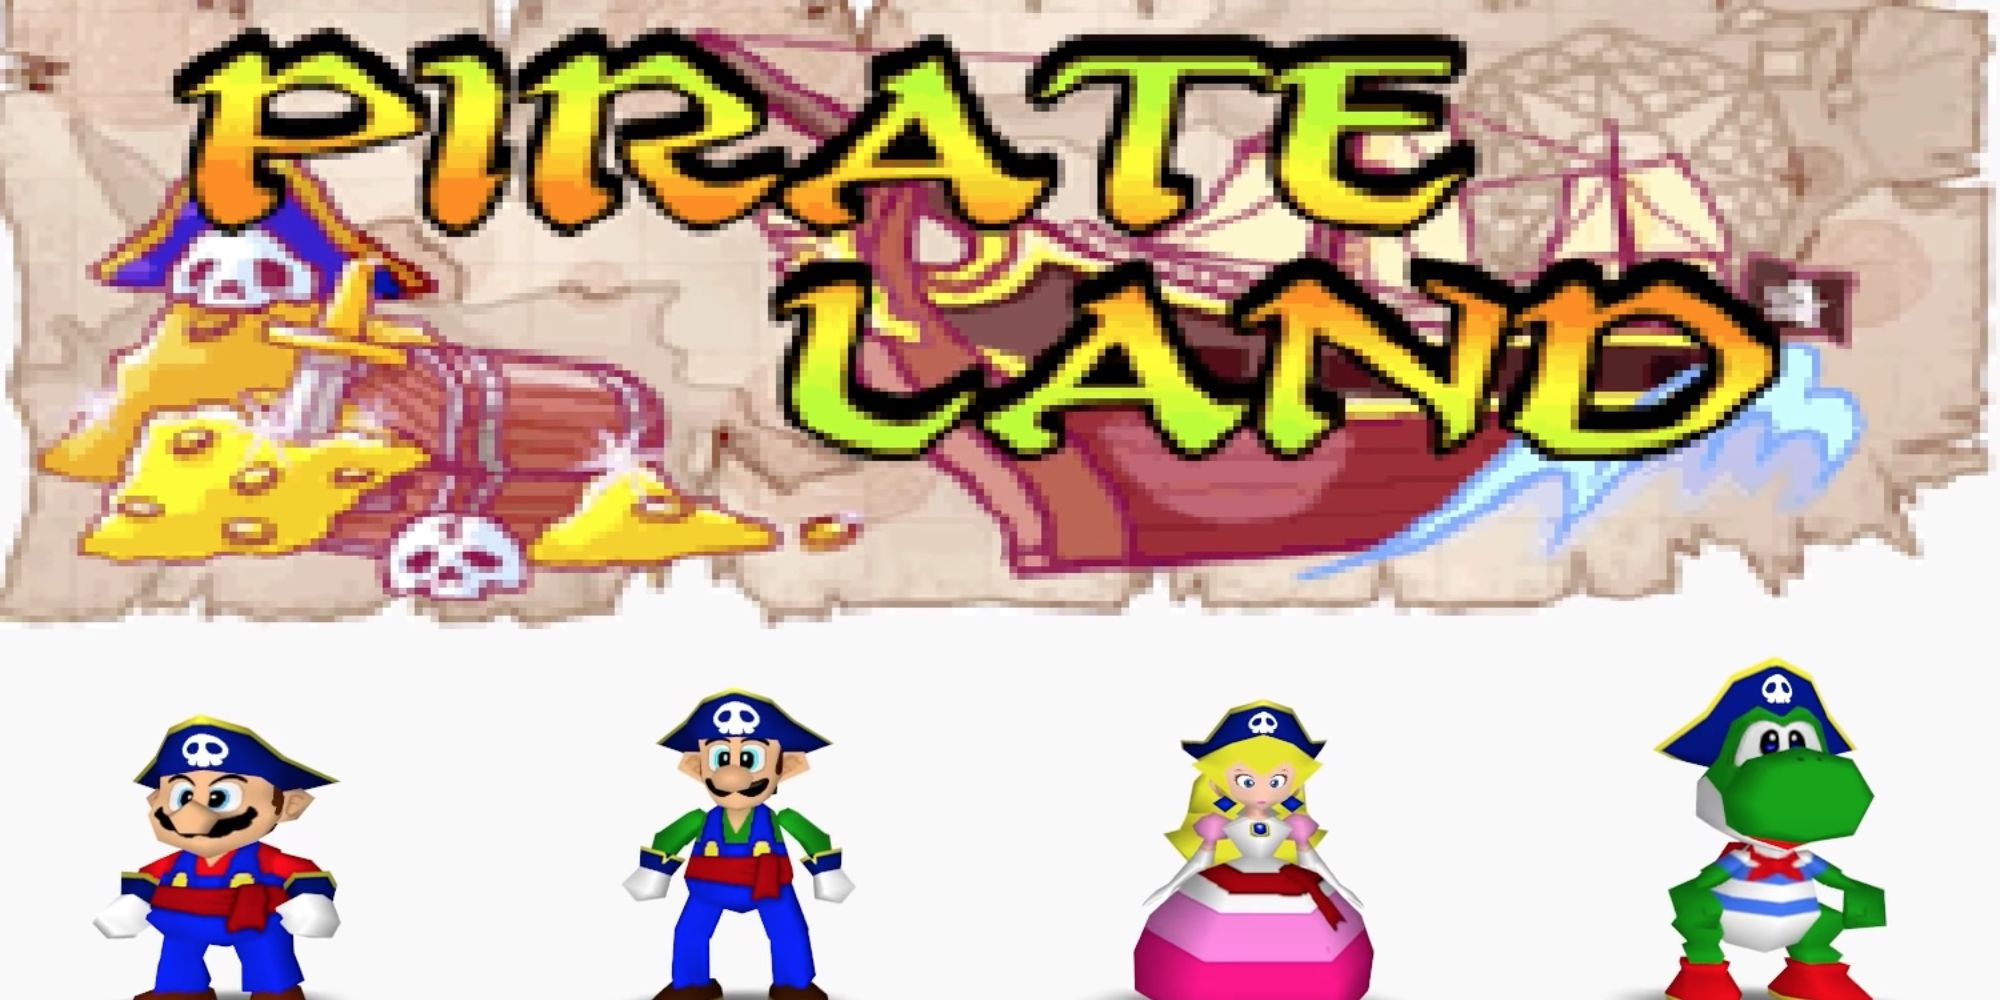 Pirate Land from Mario Party 2 featuring Mario, Luigi, Princess Peach, and Yoshi